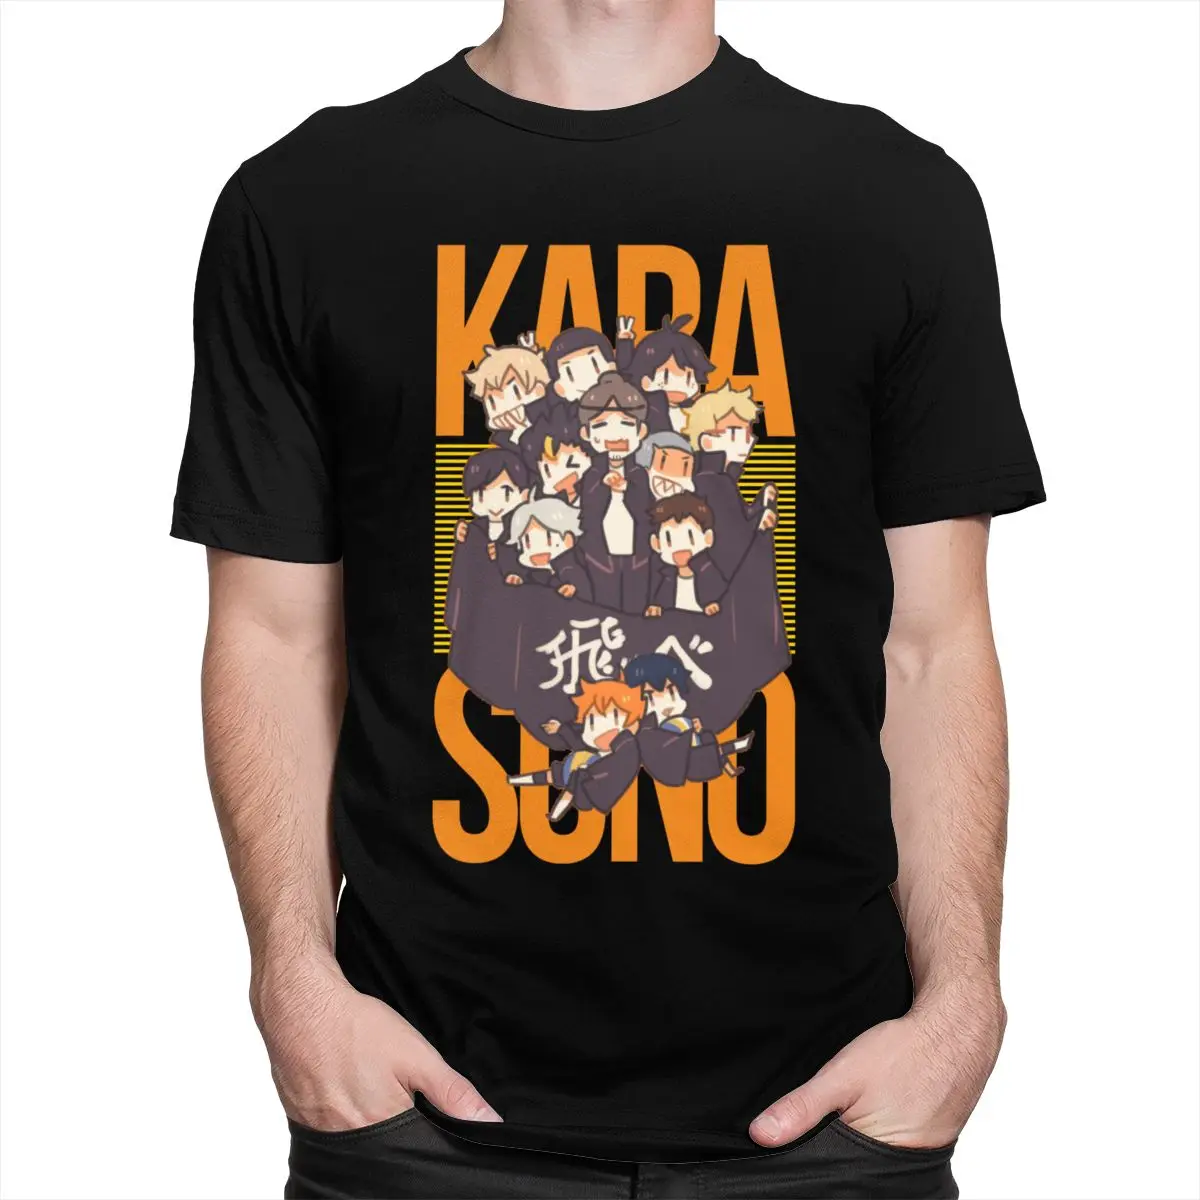 Cool Team Karasuno T Shirt Men Round Neck Short-Sleeve Haikyuu Printed T-shirt 100% Cotton Slim Fit Tee Tops Manga Apparel Merch